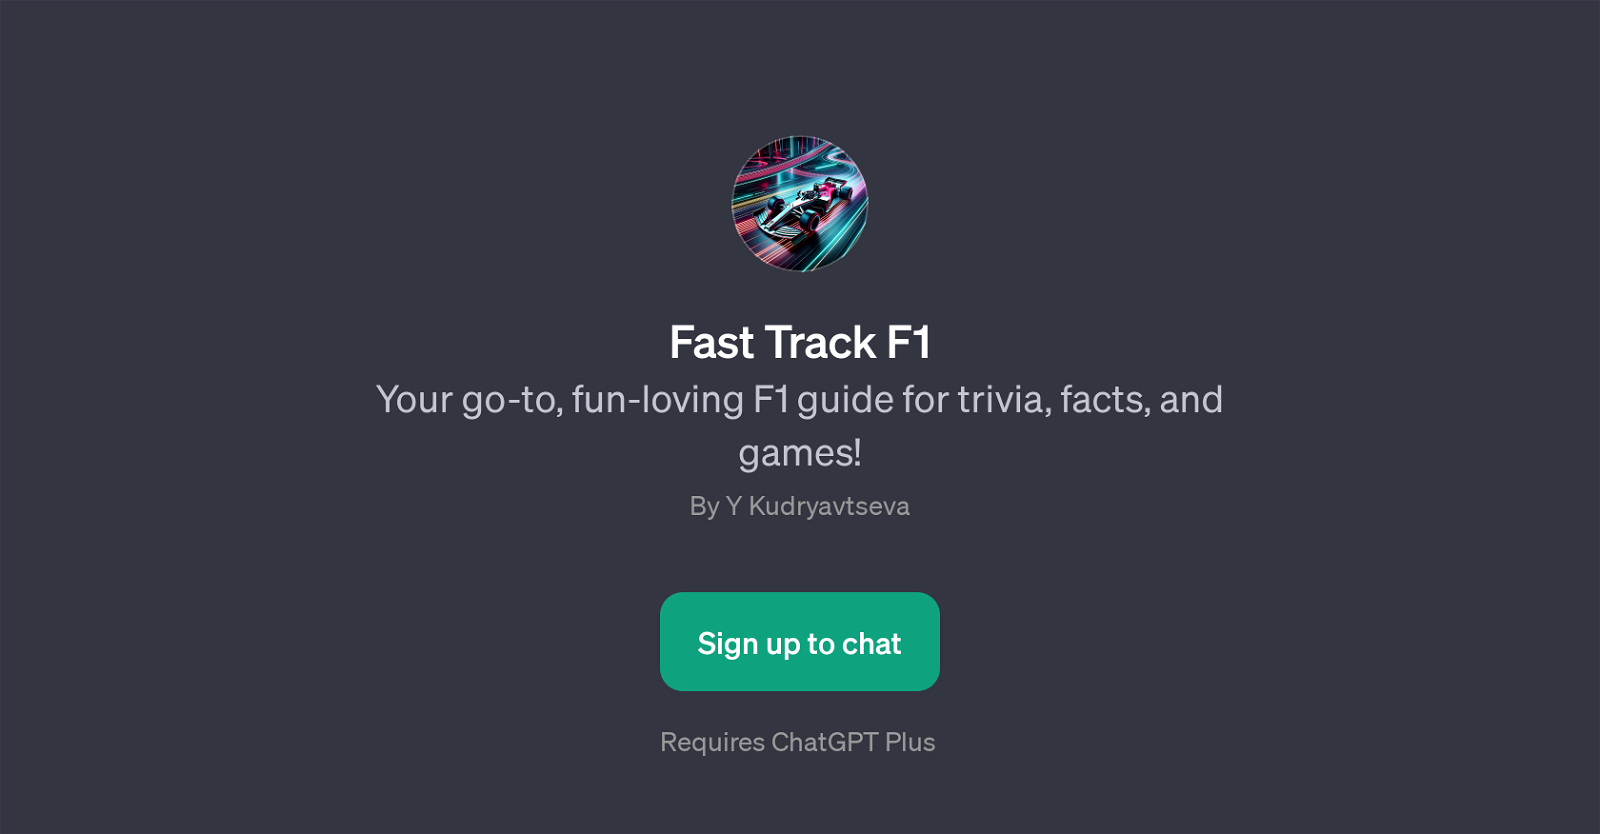 Fast Track F1 website